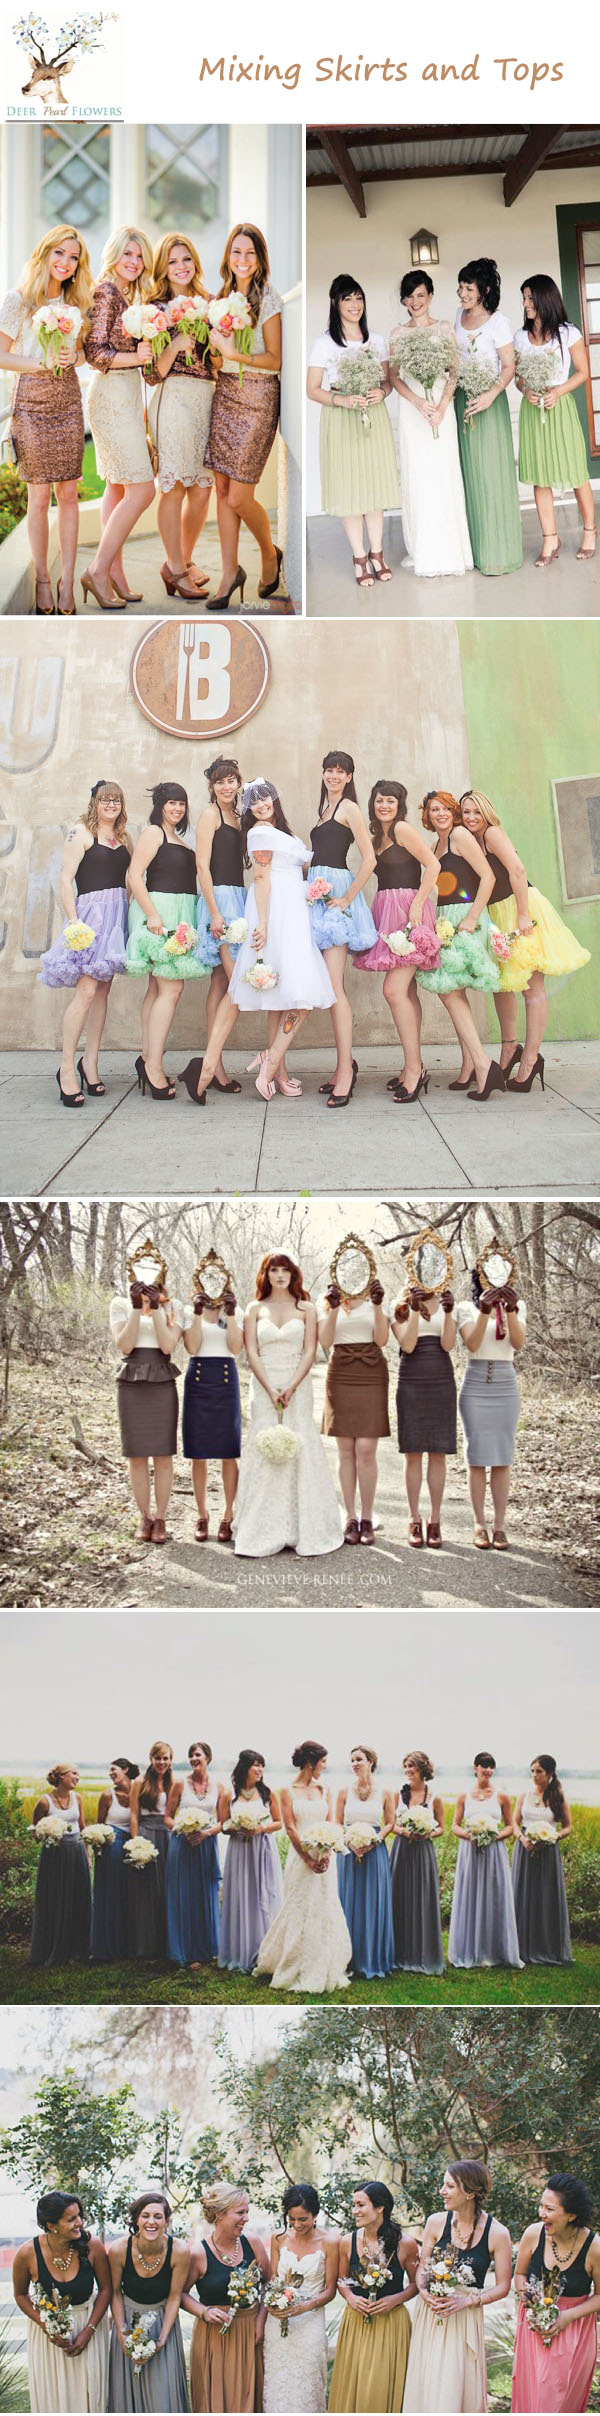 unique bridesmaid dress ideas - mixing skirts and tops mismatched bridesmaid dress